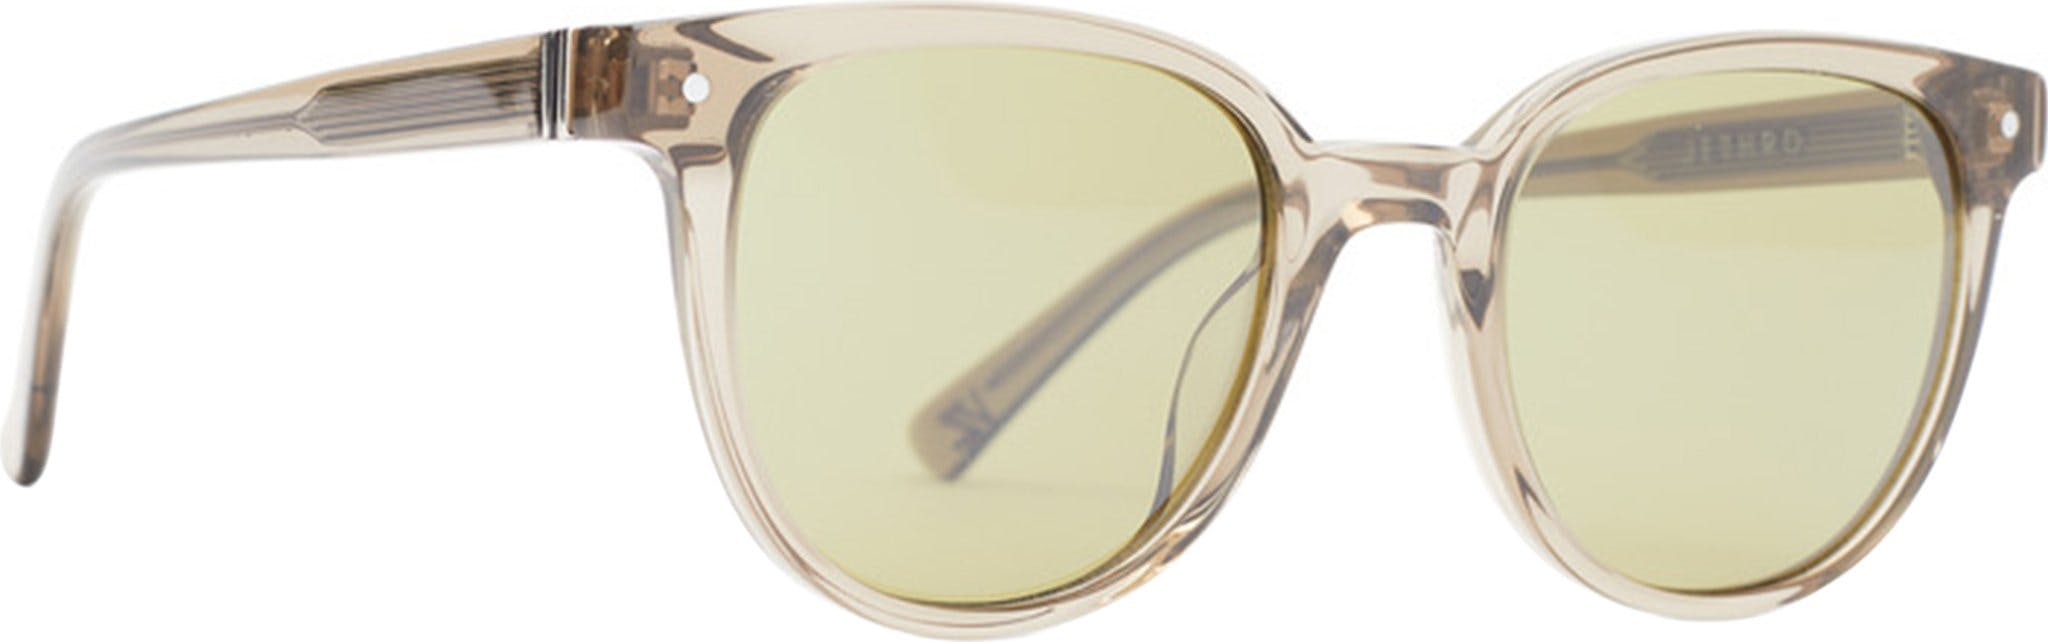 Product image for Jethro Sunglasses - Unisex